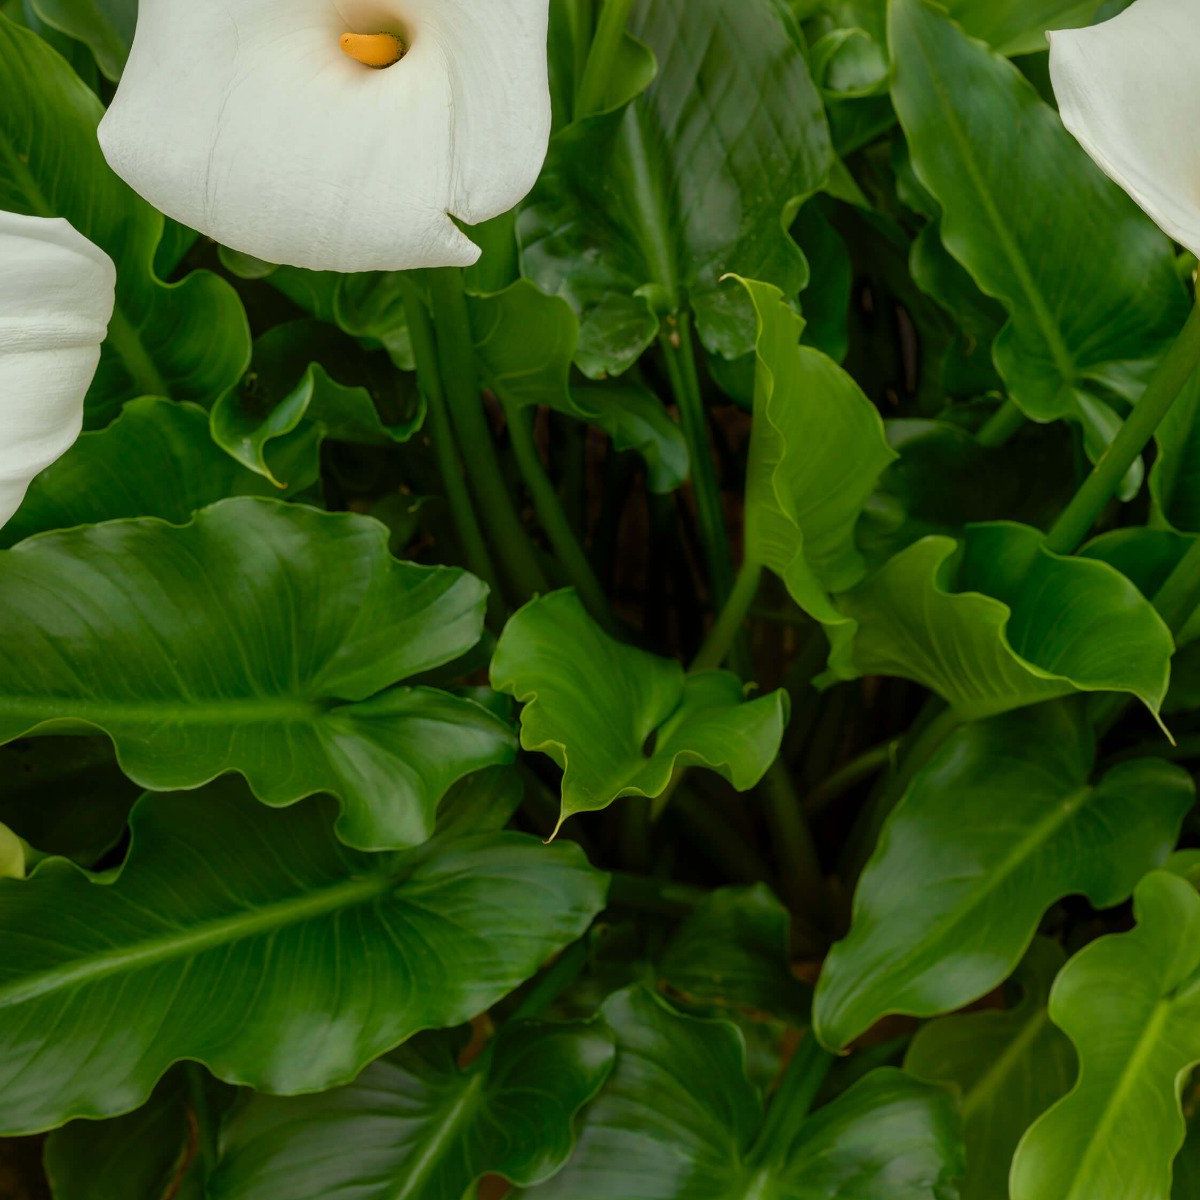 White calyx flowers